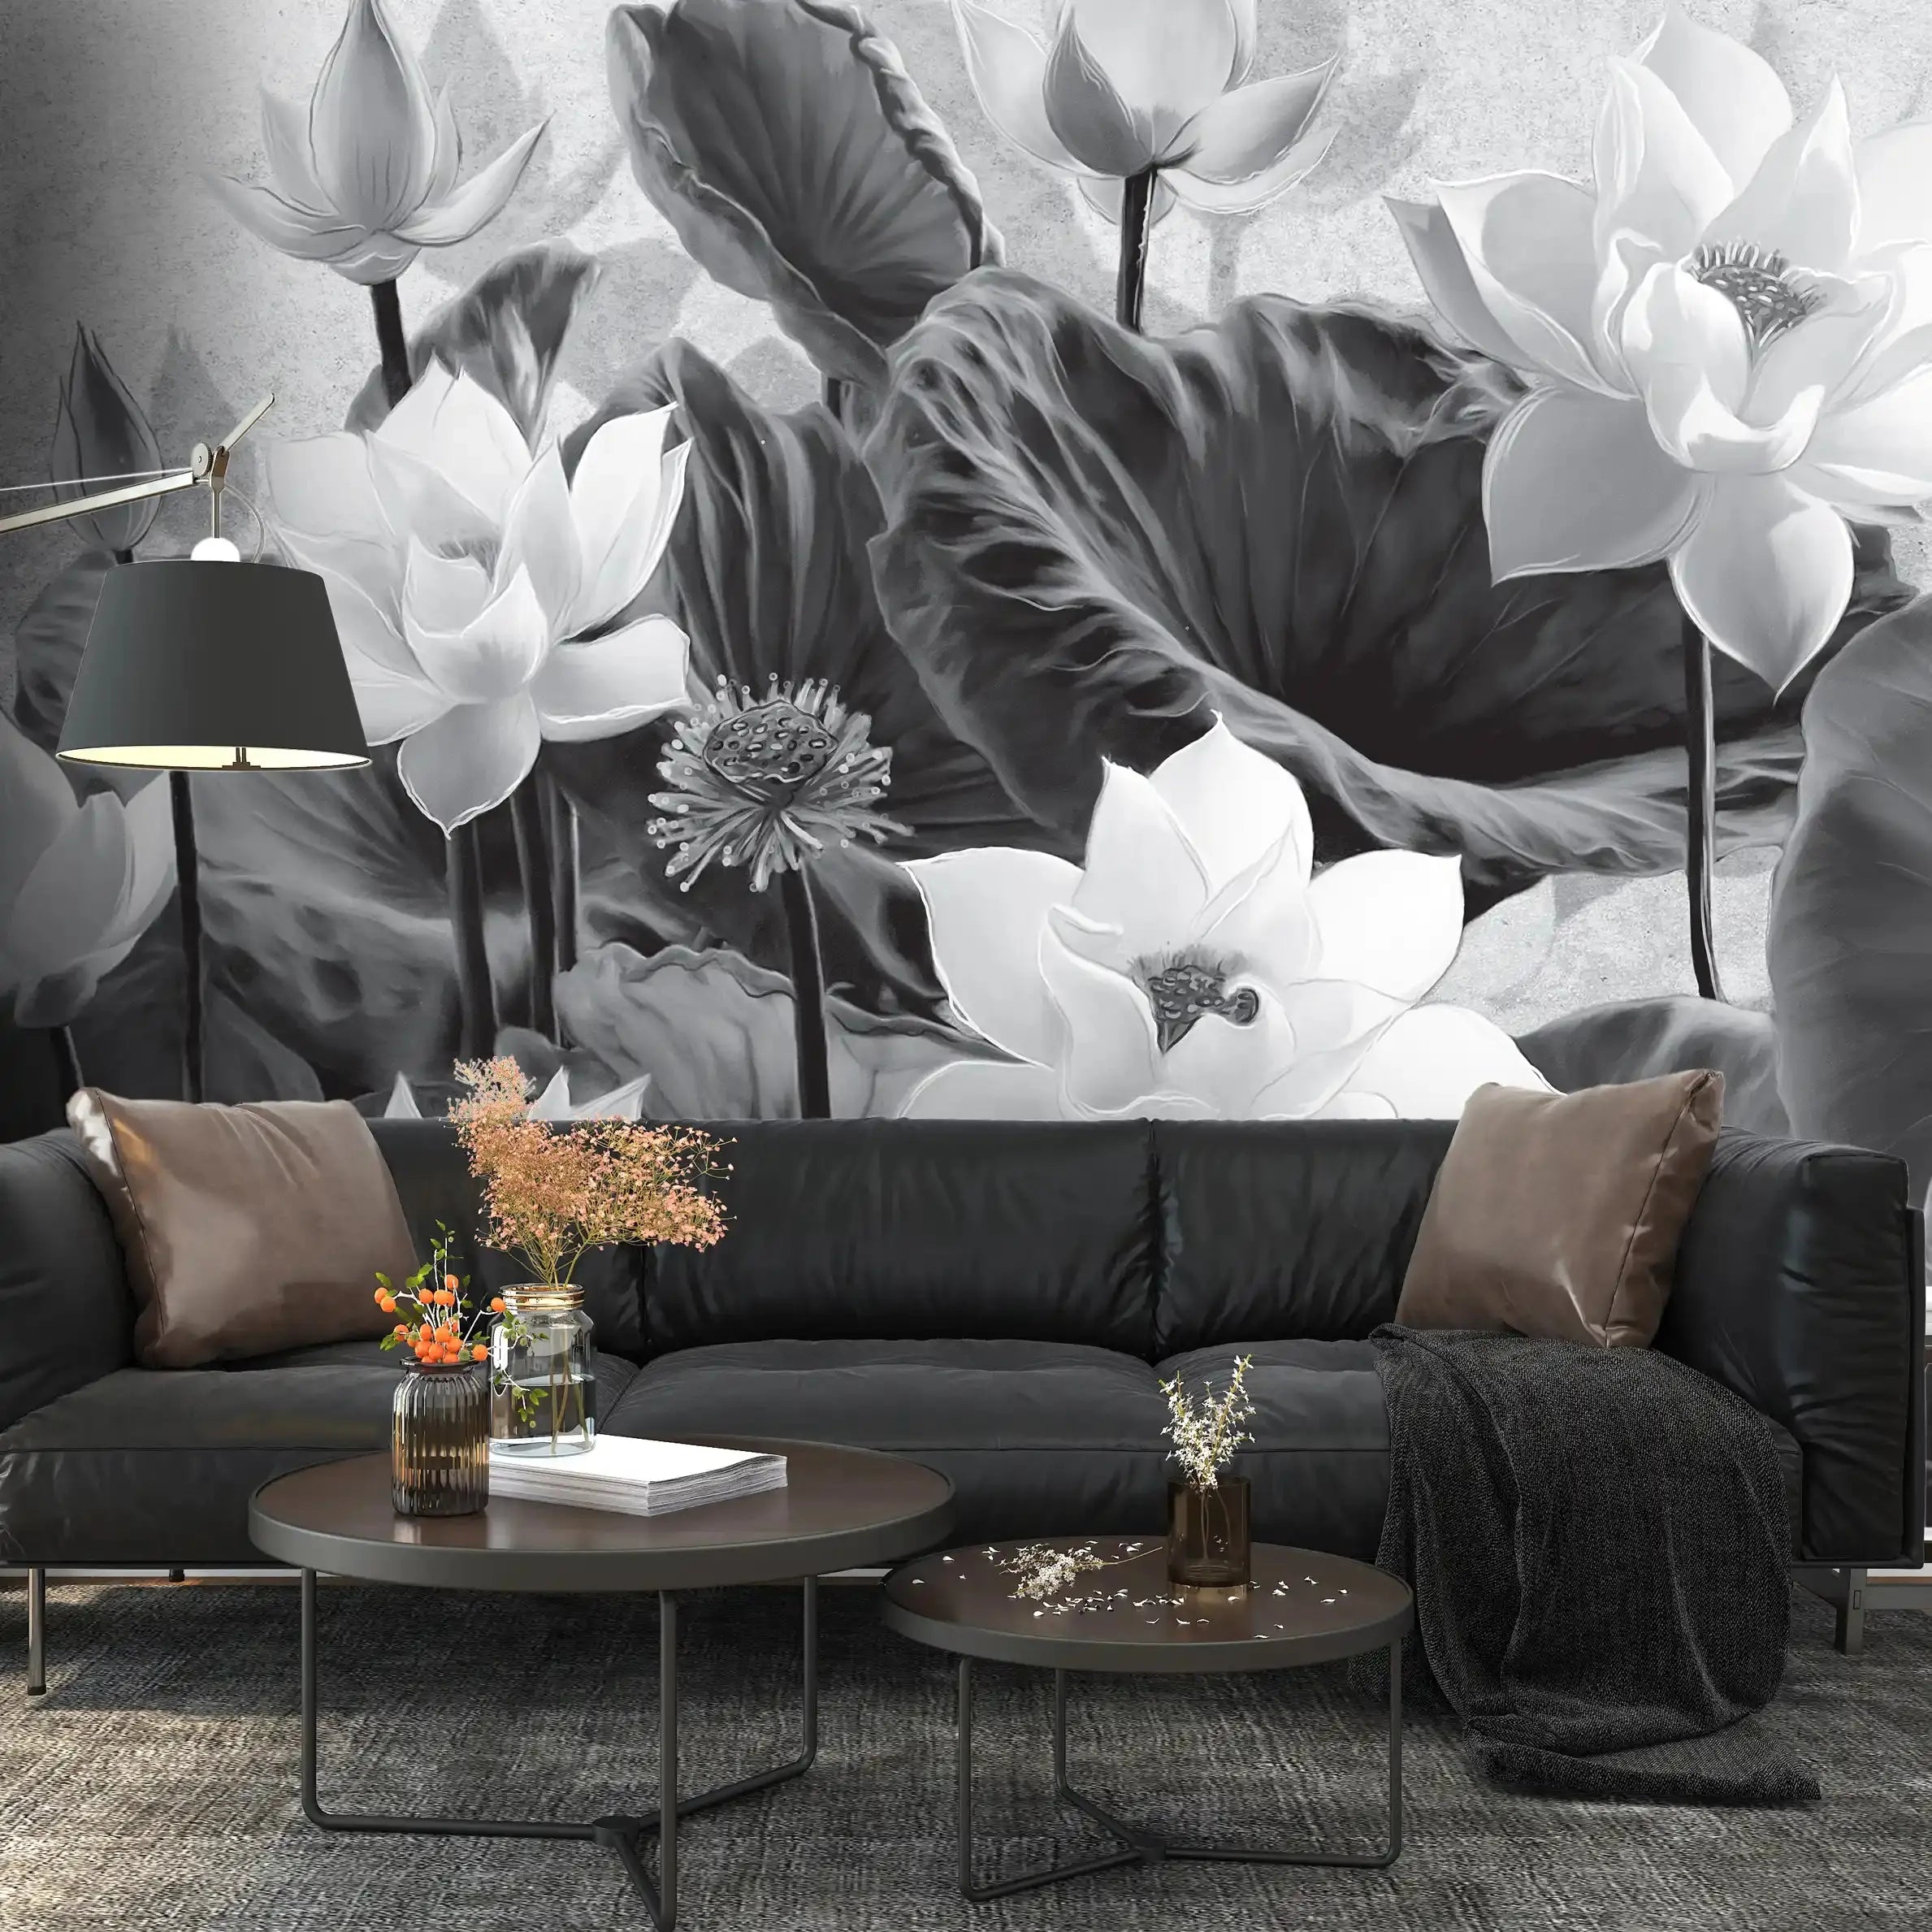 3019-E / Botanical Wallpaper: Self-Adhesive Lotus Blossom, Modern Room Decor for Easy Peel and Stick Installations - Artevella